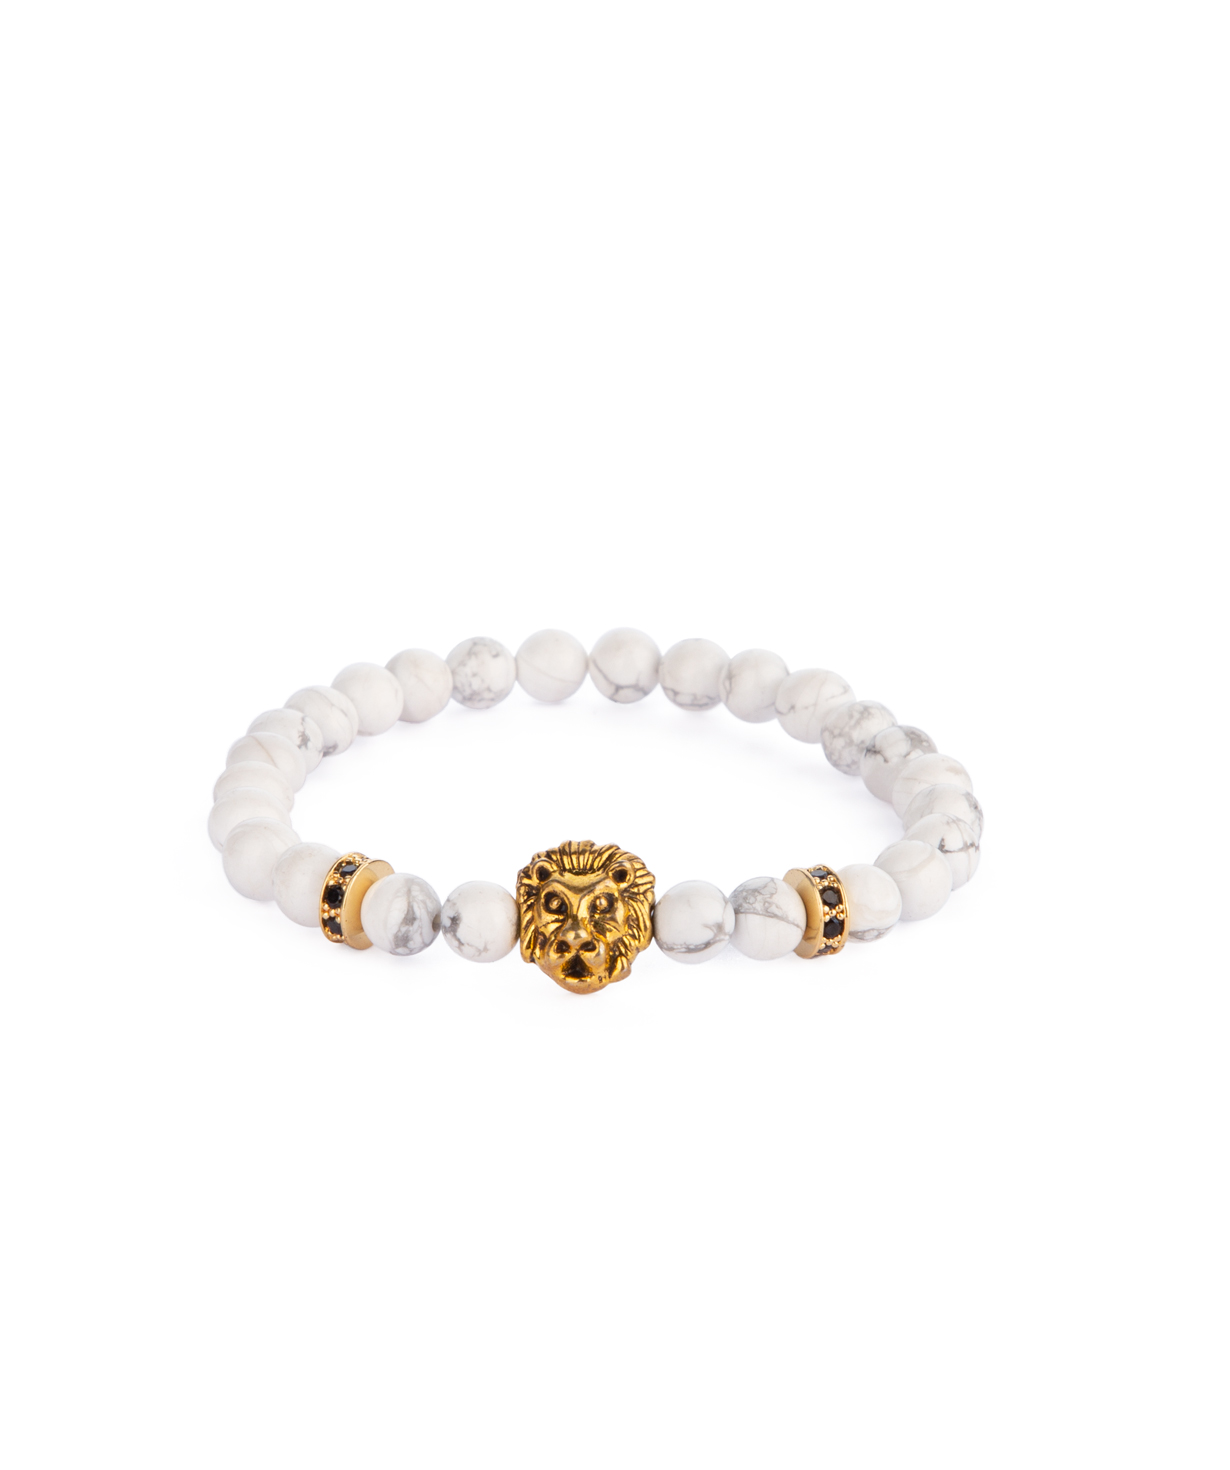 Bracelet `Ssangel Jewelry` men`s №17, with natural stones